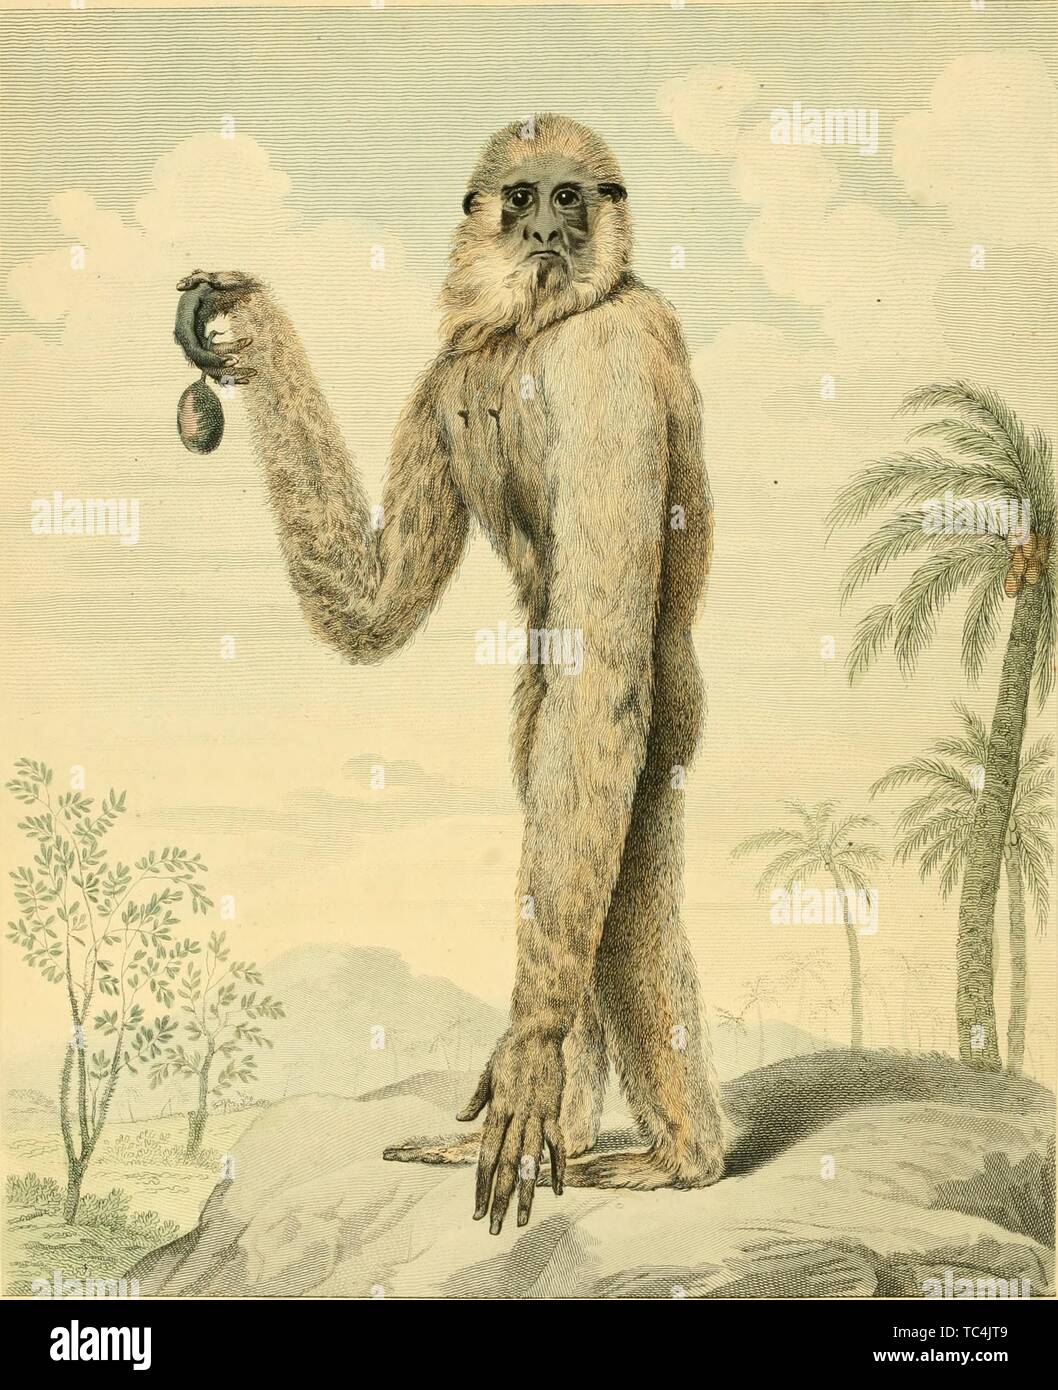 Gravur der Long-Armed Gibbon (simia Longimana), aus dem Buch "Usei Leveriani explicatio, anglica et Latina" durch Shaw George, 1792. Mit freundlicher Genehmigung Internet Archive. () Stockfoto